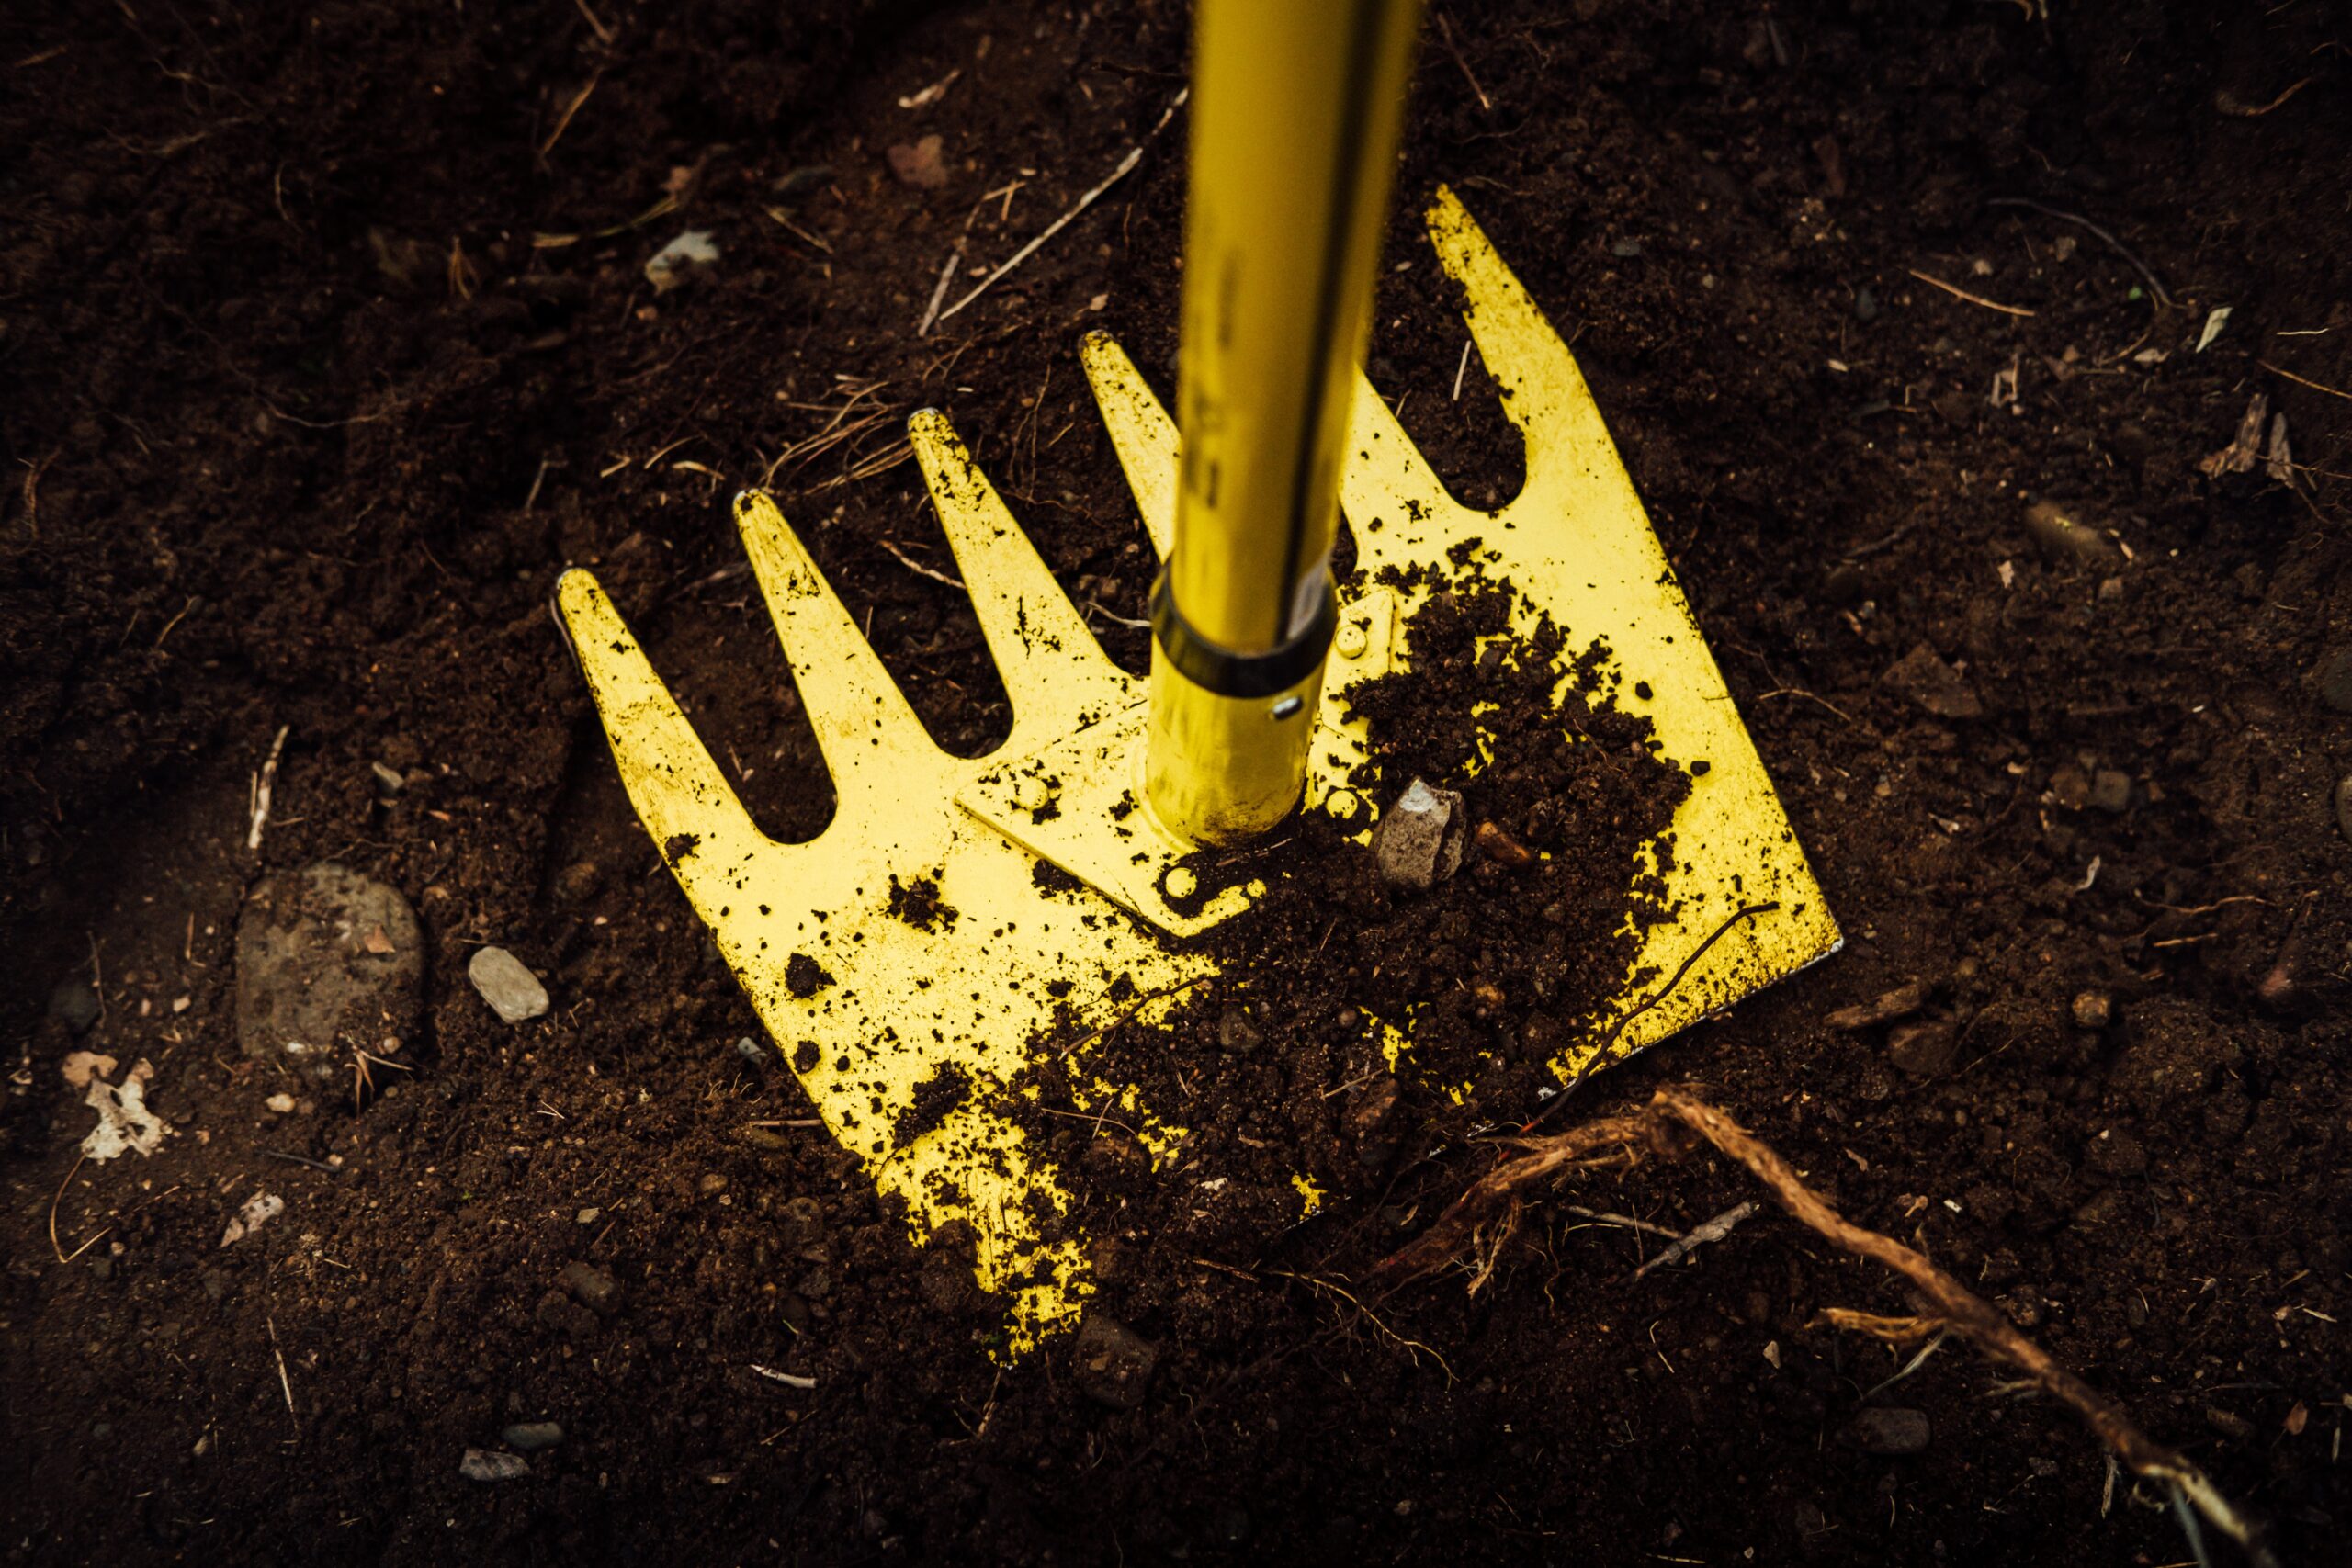 Rake in Soil | Plant Health Care Soil Amemdments by Burkholder PHC